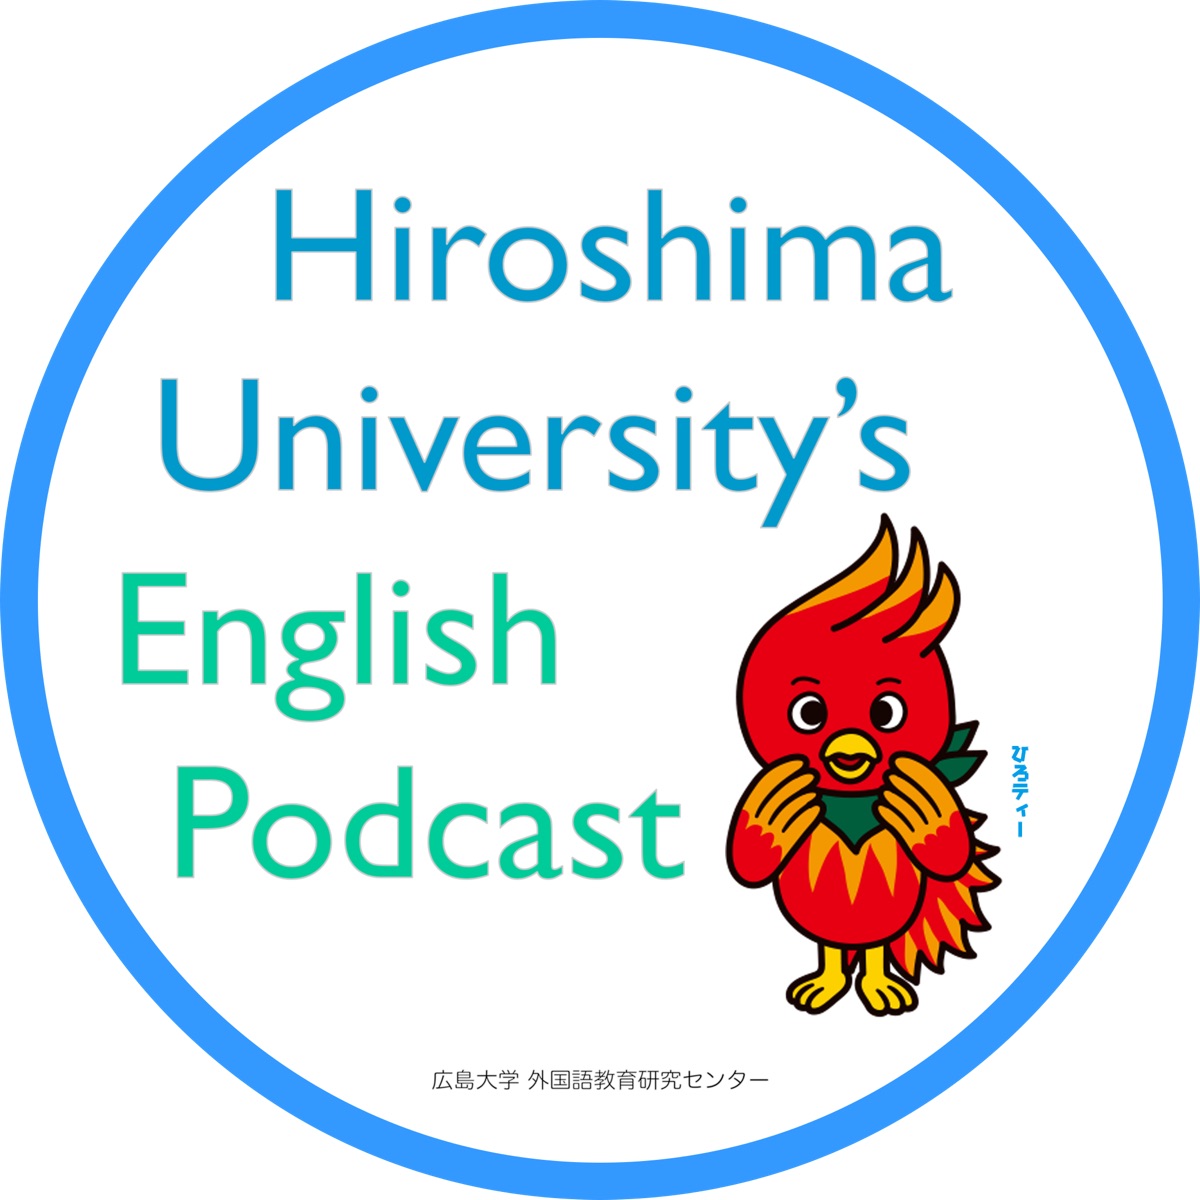 Hiroshima University S English Podcast American Podcasts